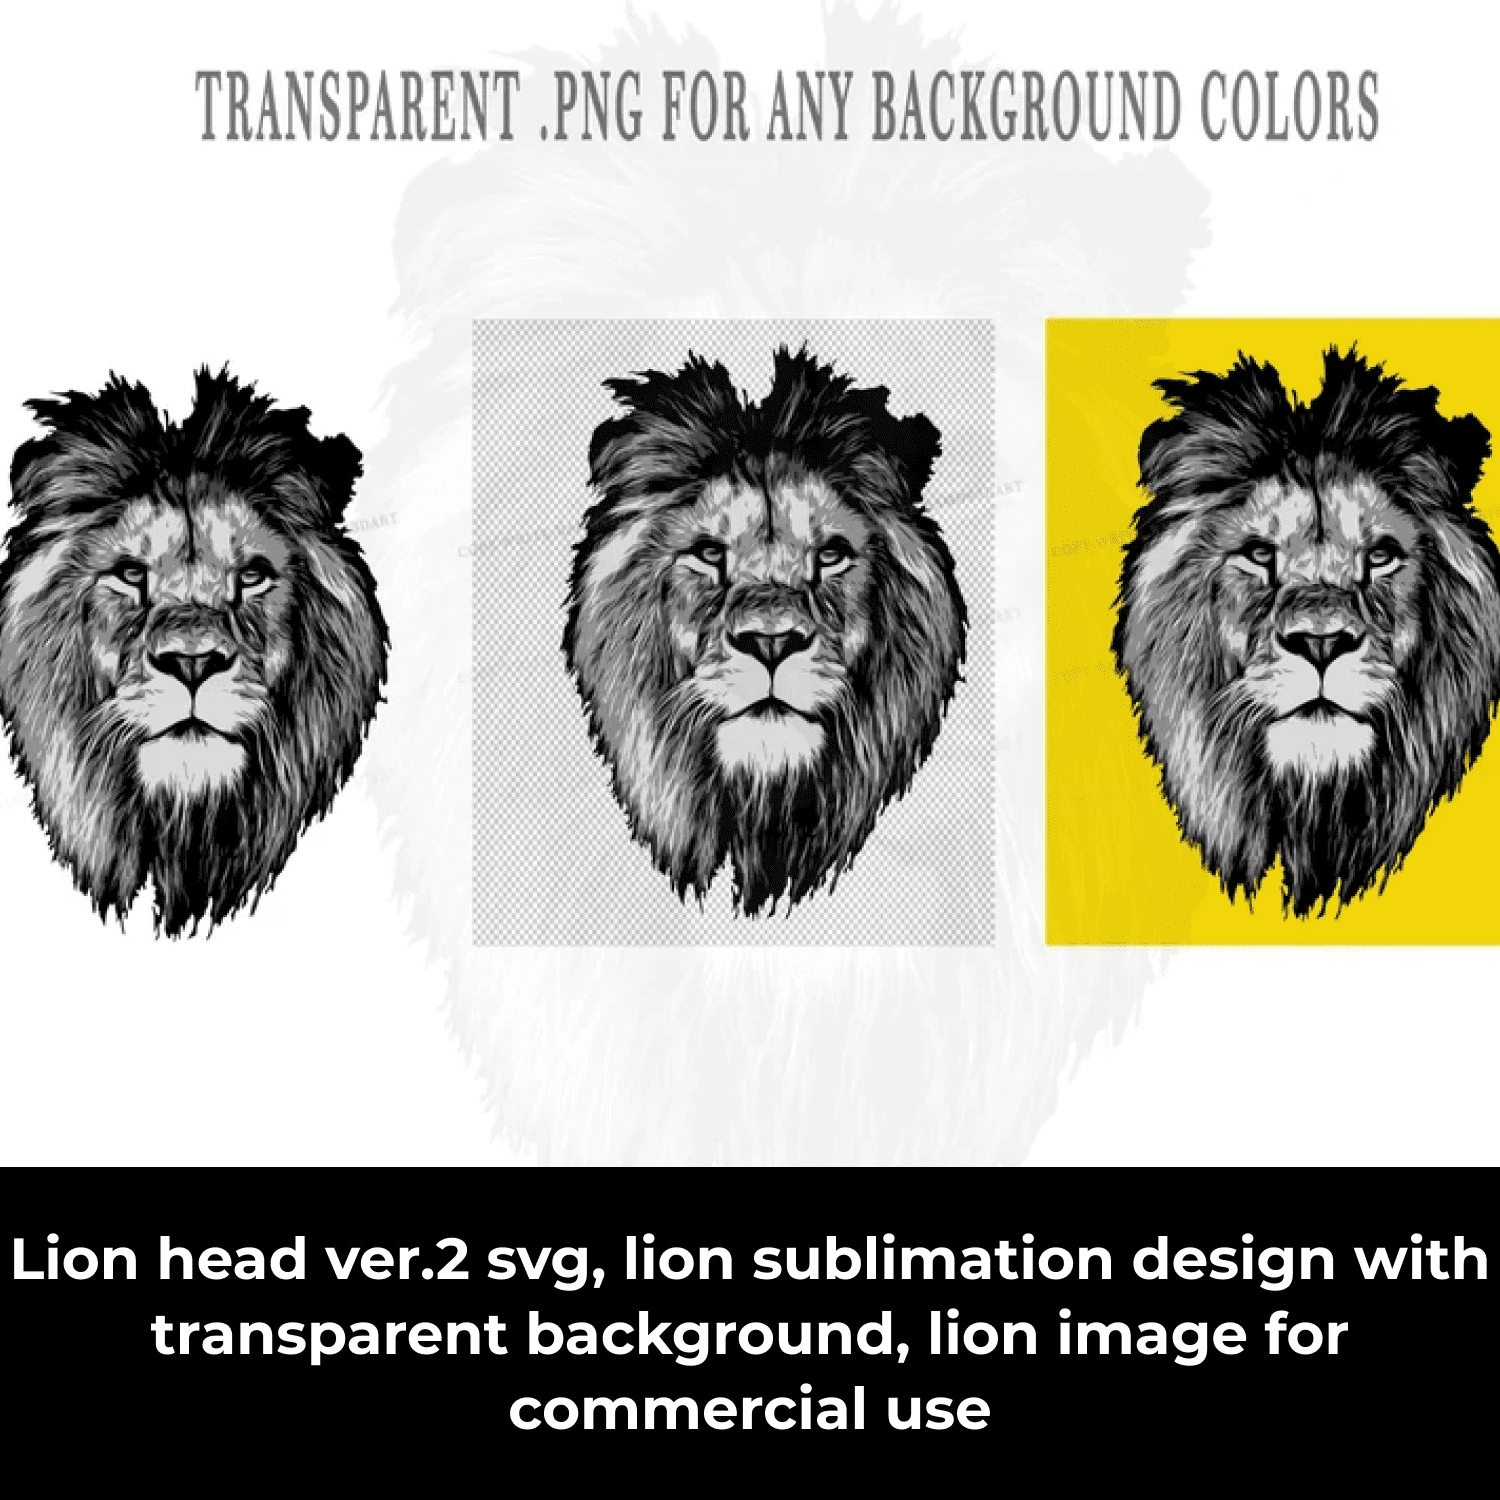 lion sublimation design with transparent background cover image.